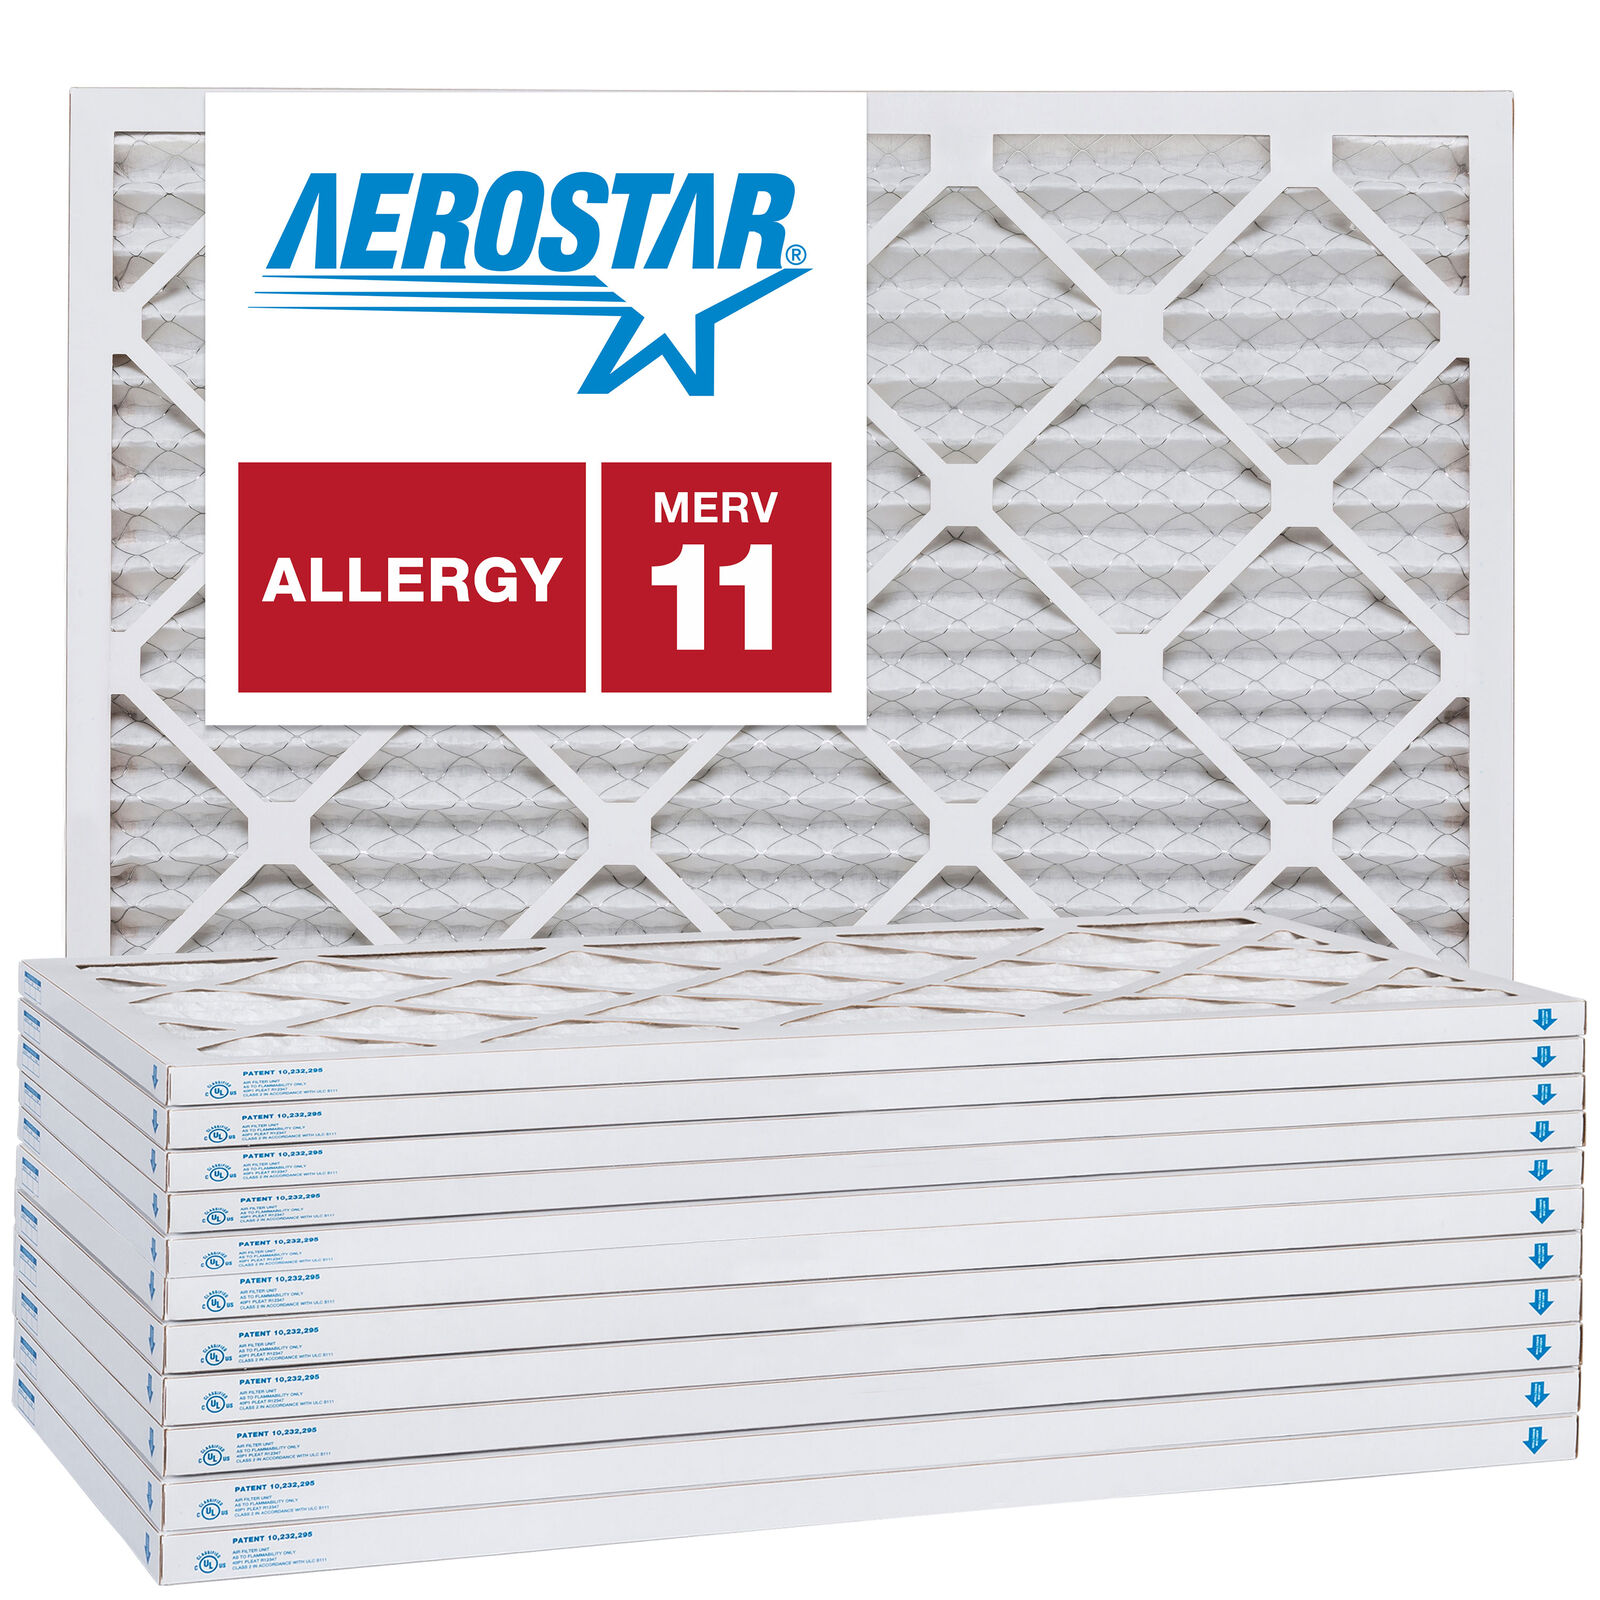 16x16x1 AC and Furnace Air Filter by Aerostar - MERV 11, Box of 12